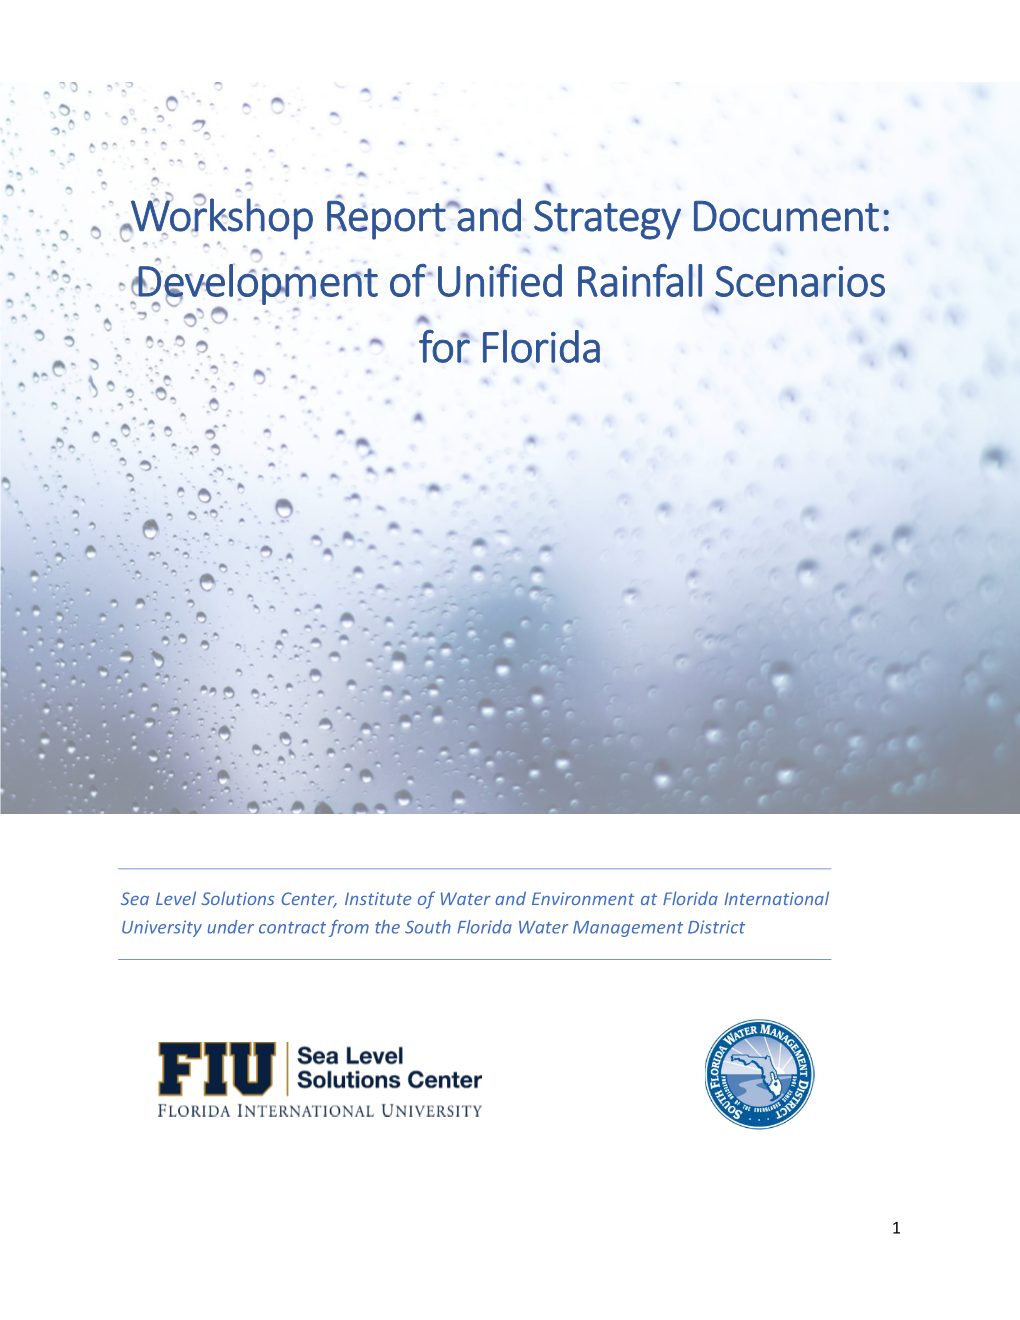 Rainfall Workshop Report